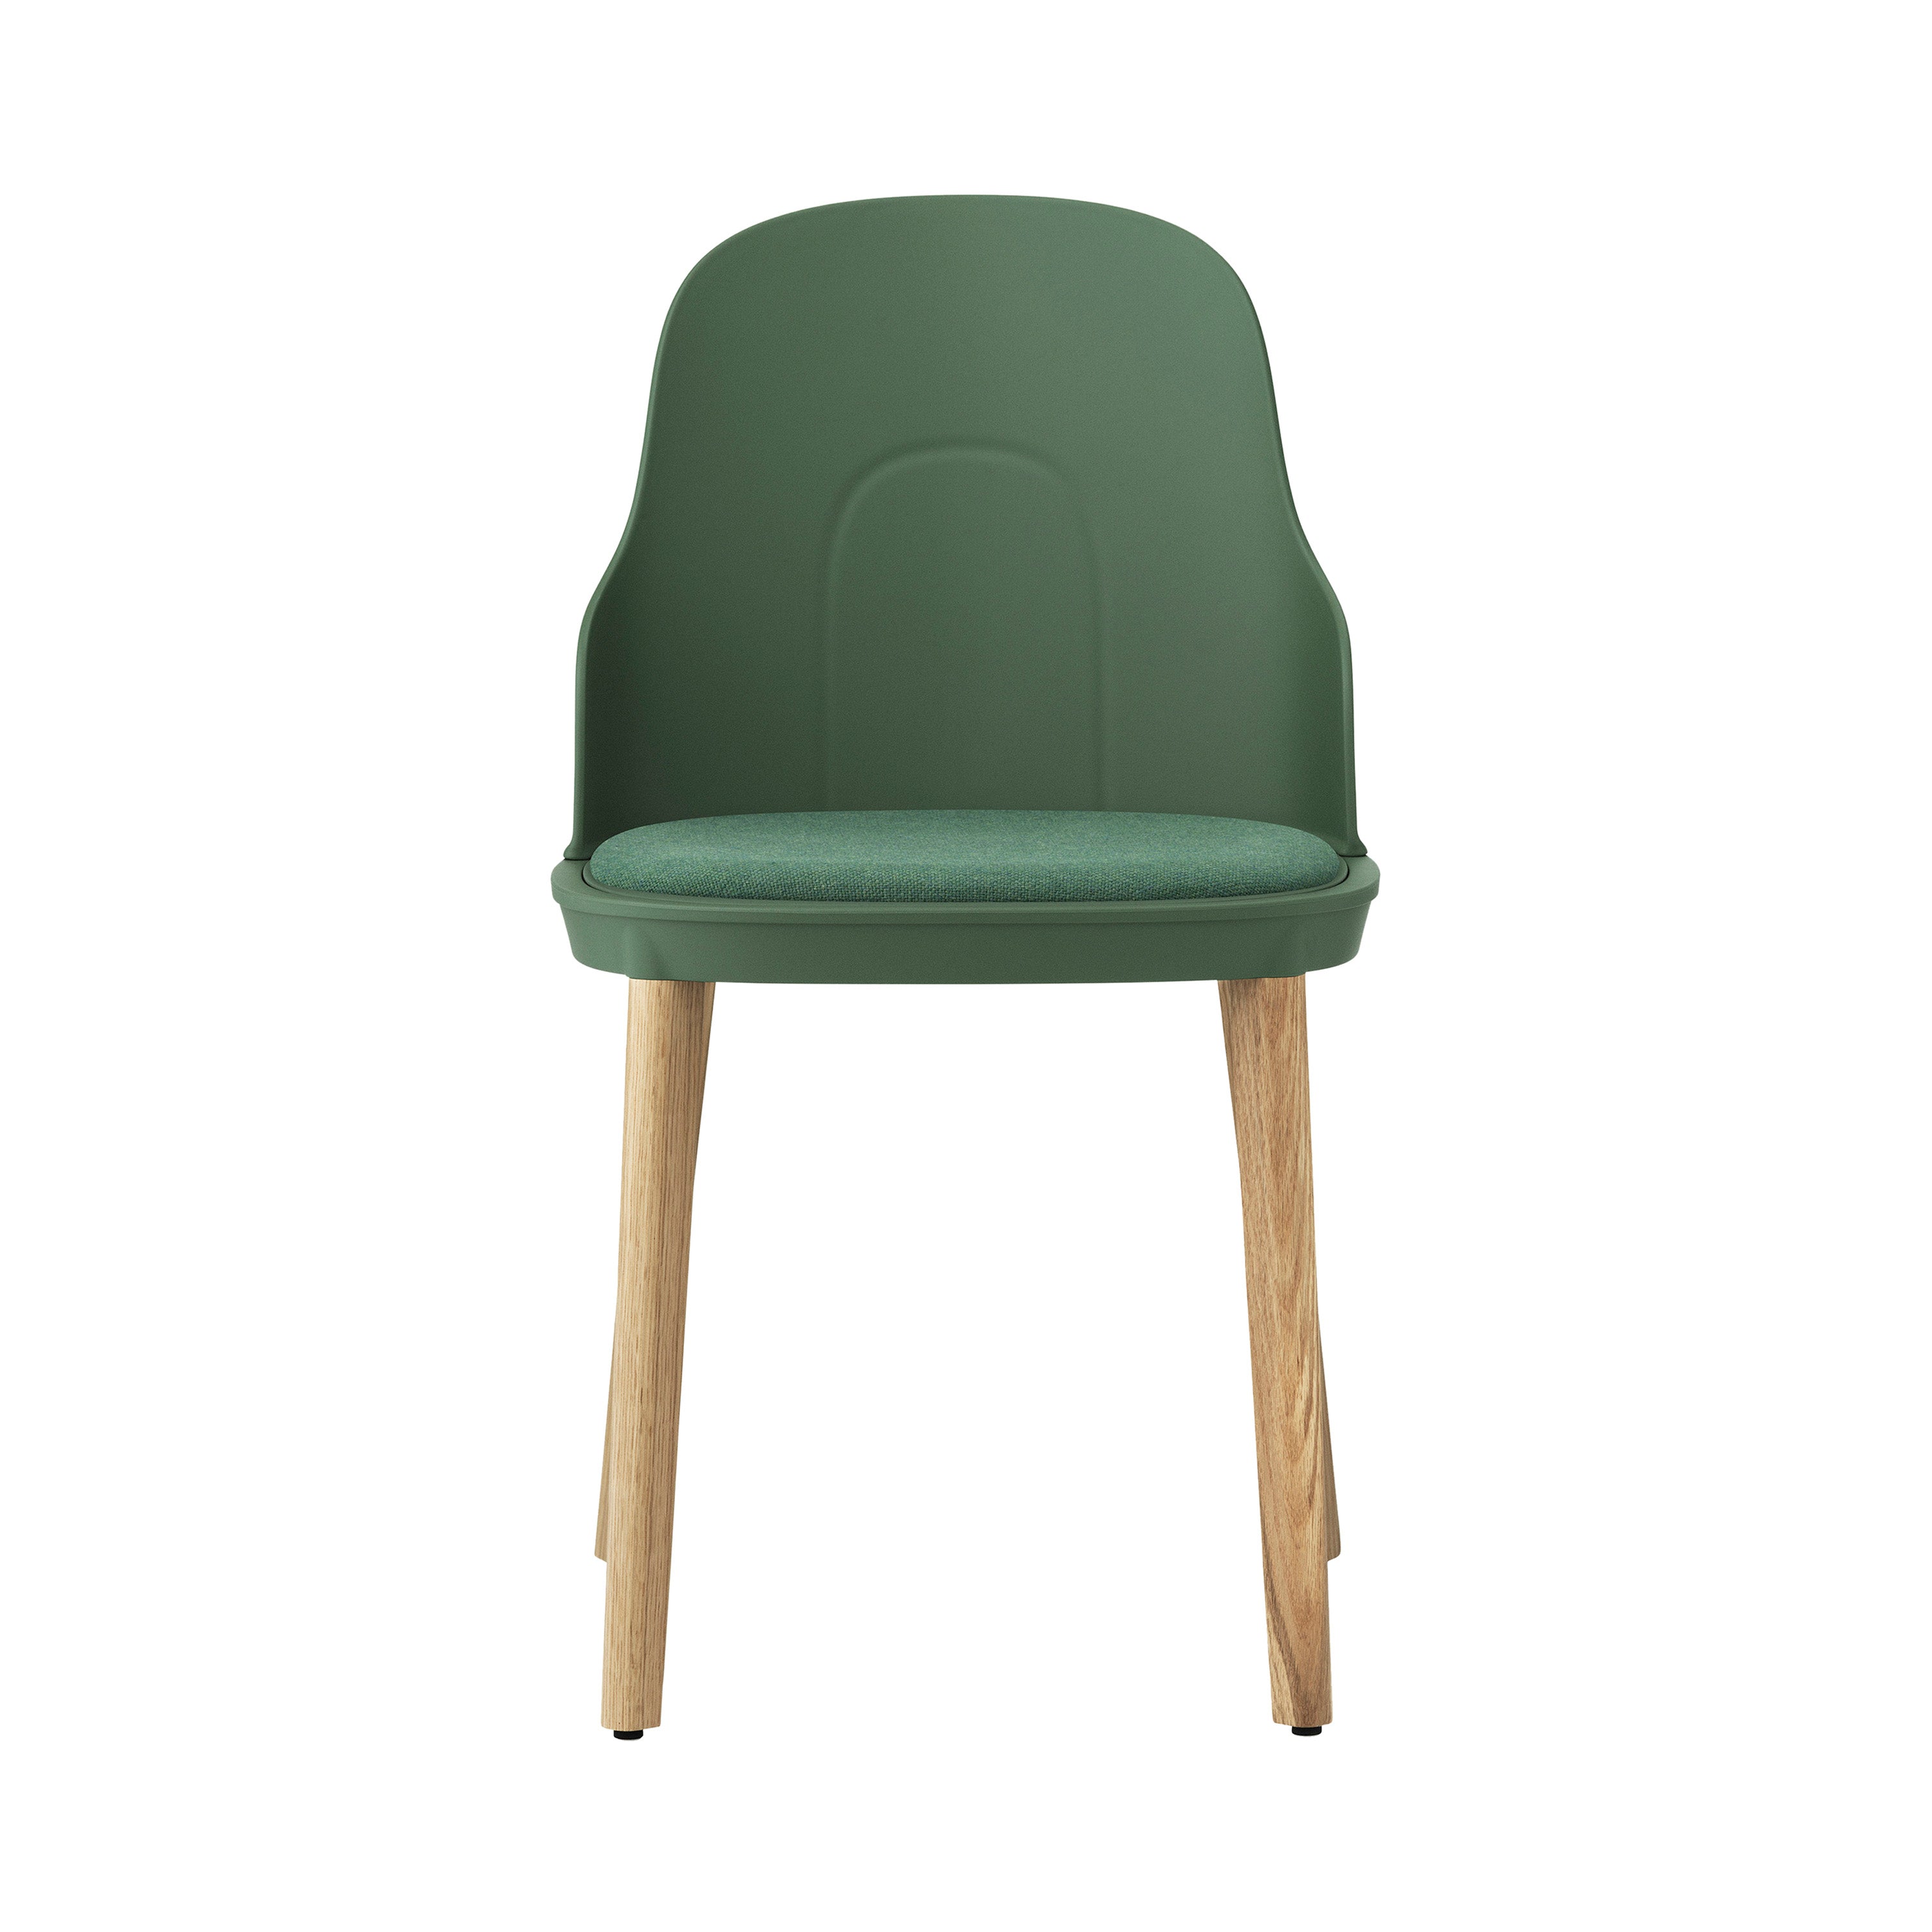 Allez Chair: Upholstered + Park Green + Oak